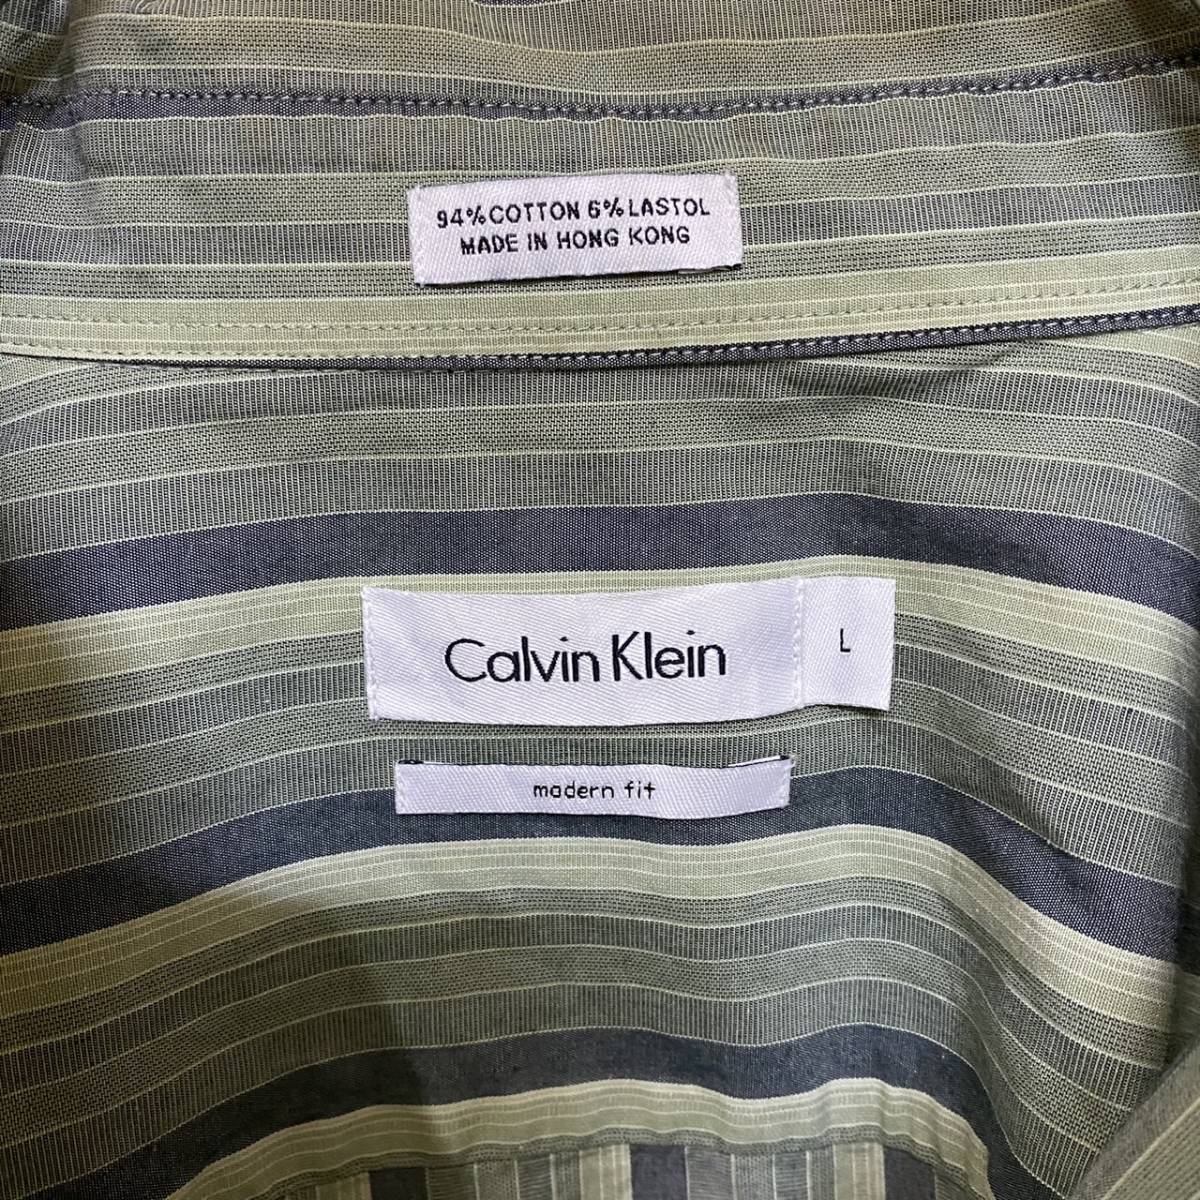 [1 jpy start ]Calvin Klein good design shirt old clothes Vintage abroad America import [862]